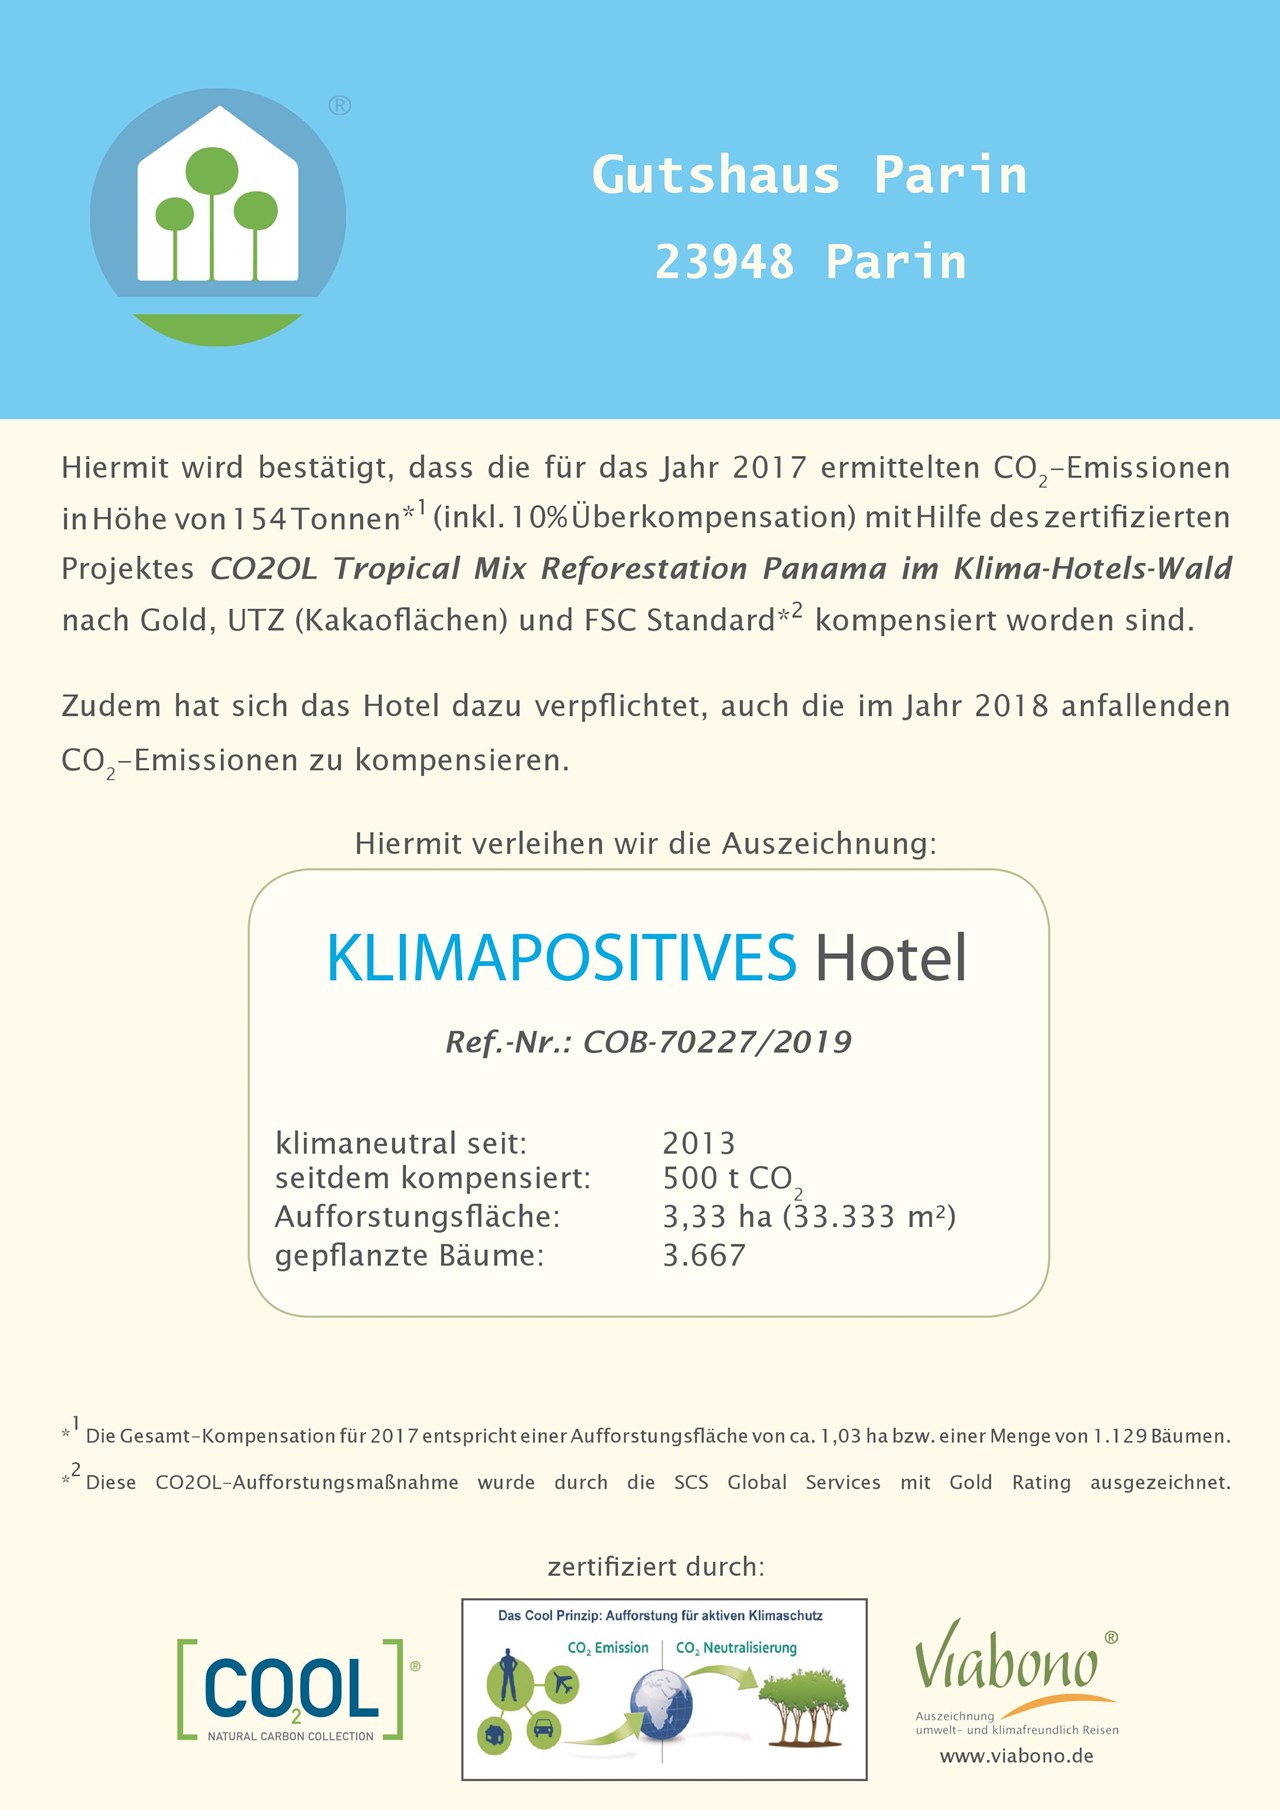 Biohotel Gutshaus Parin Evidence certificates Climate hotels / Viabono